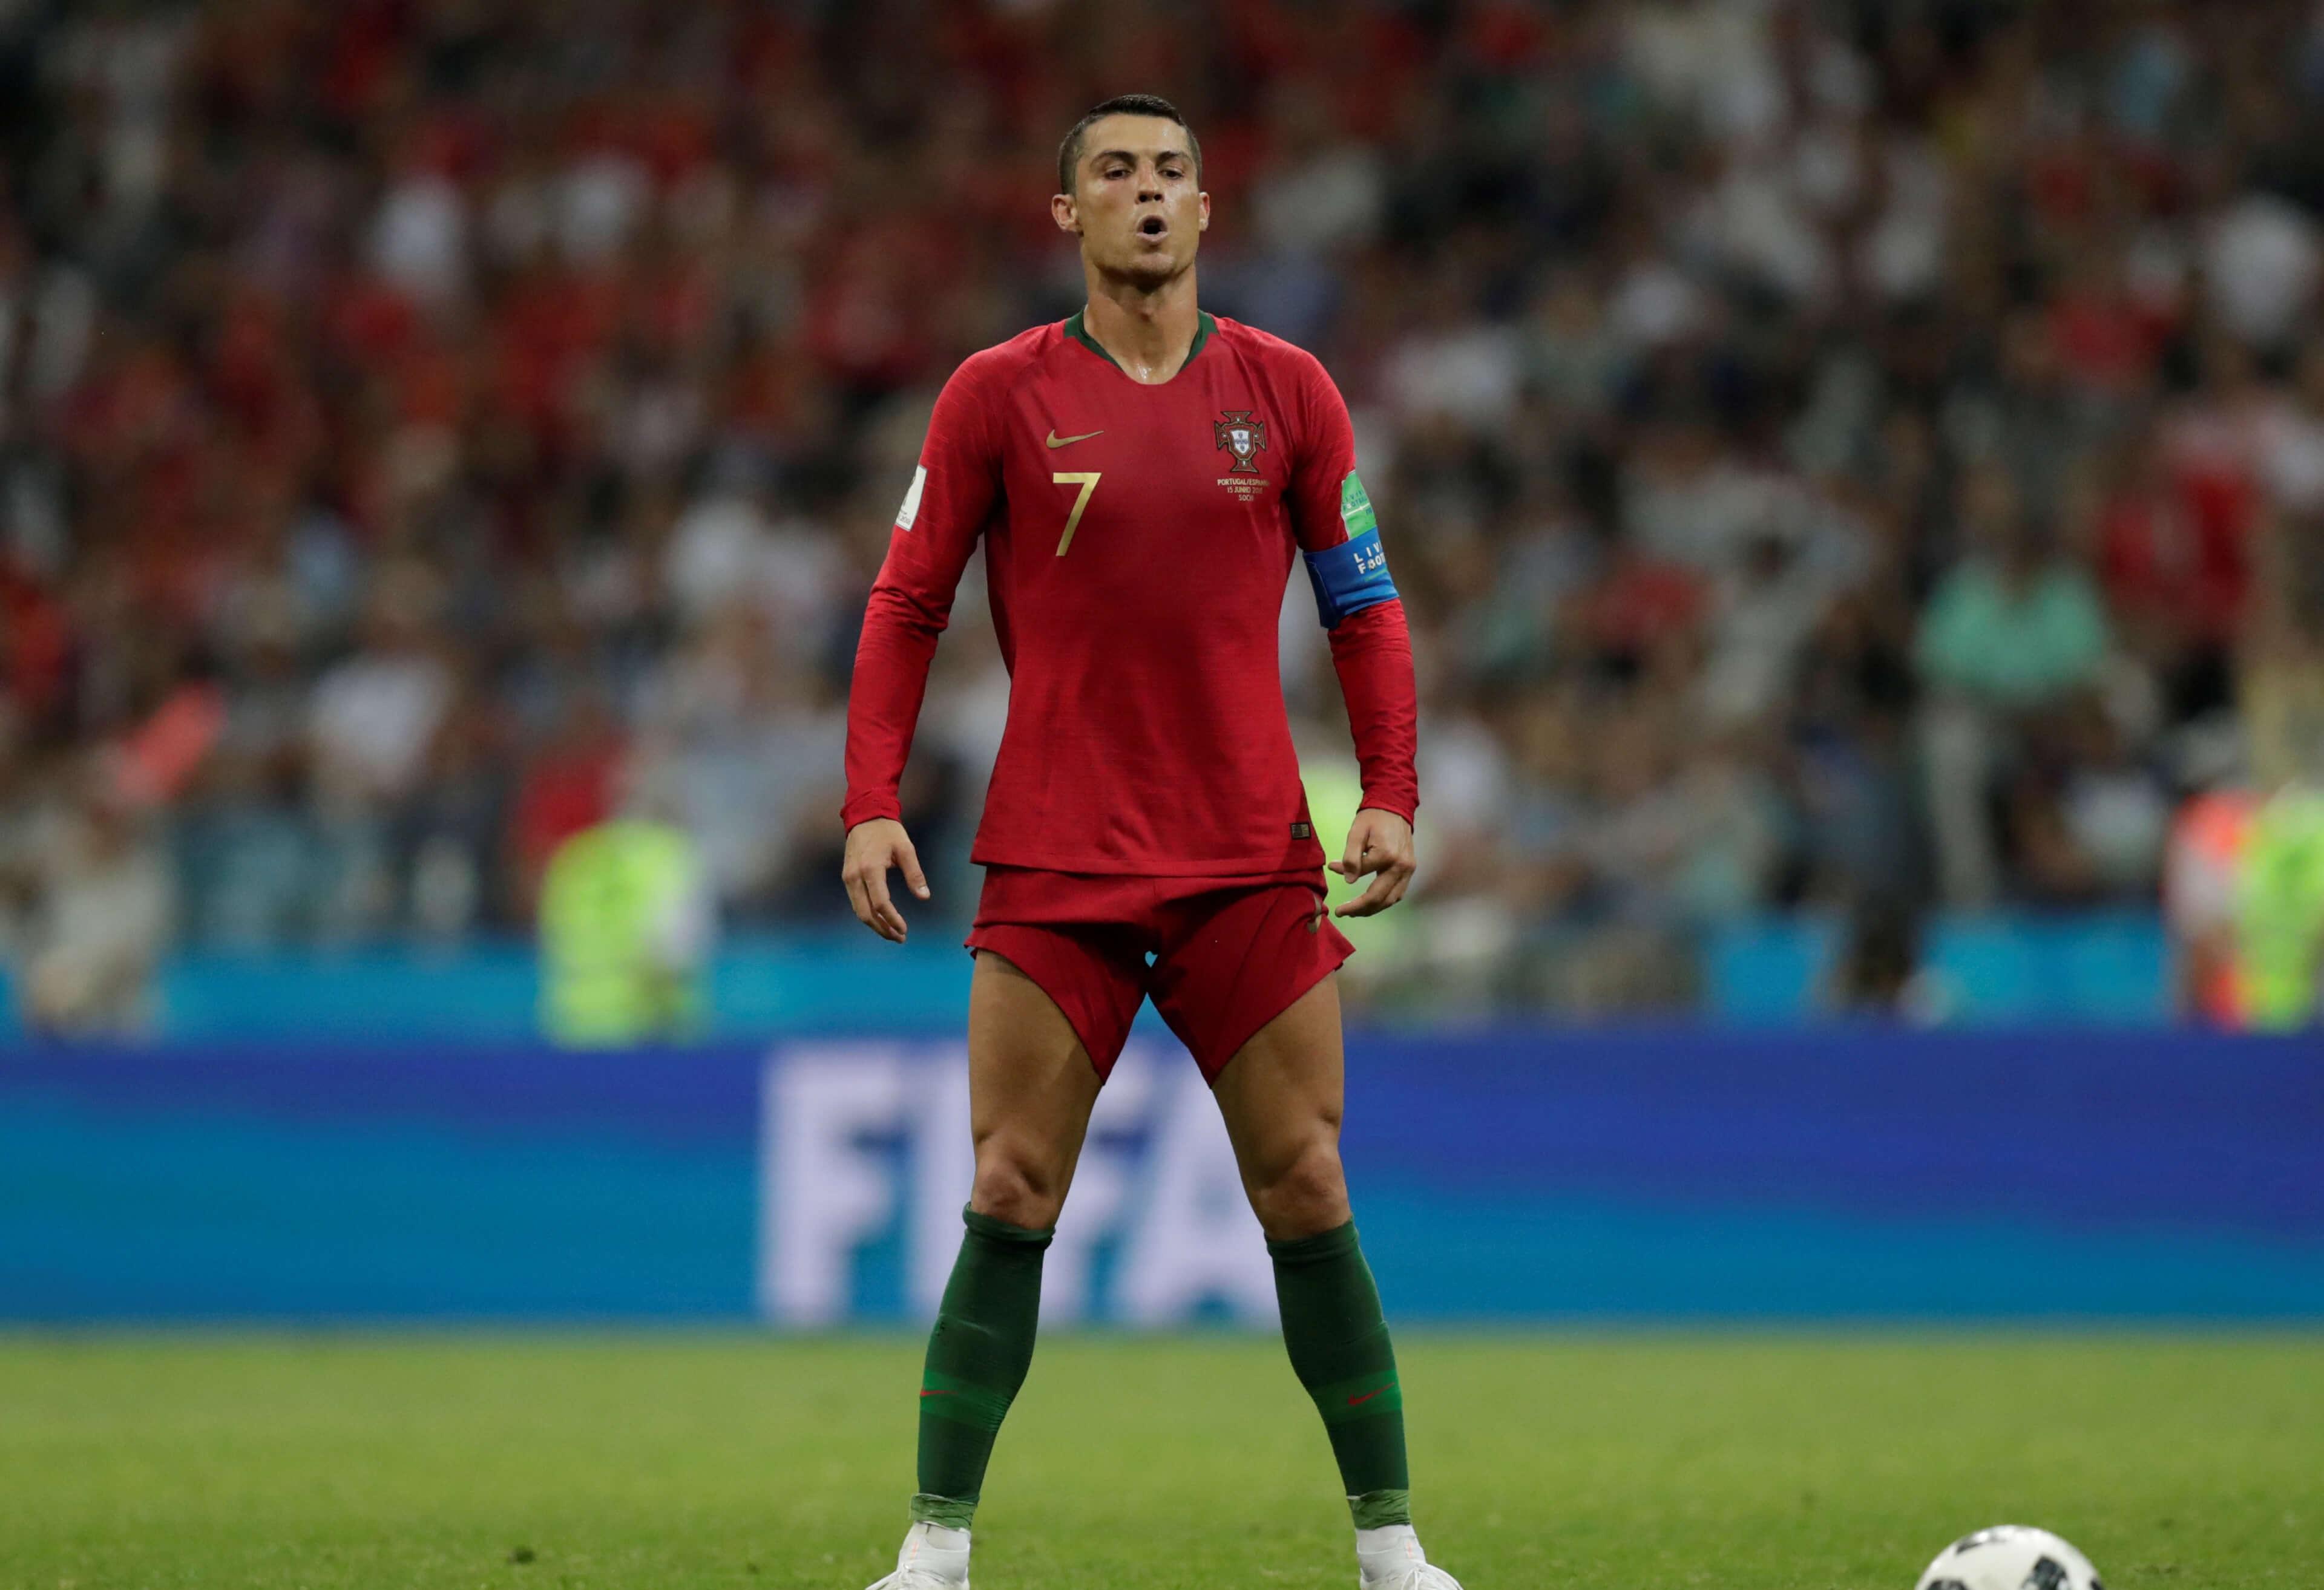 Ronaldo In World Cup Image to u